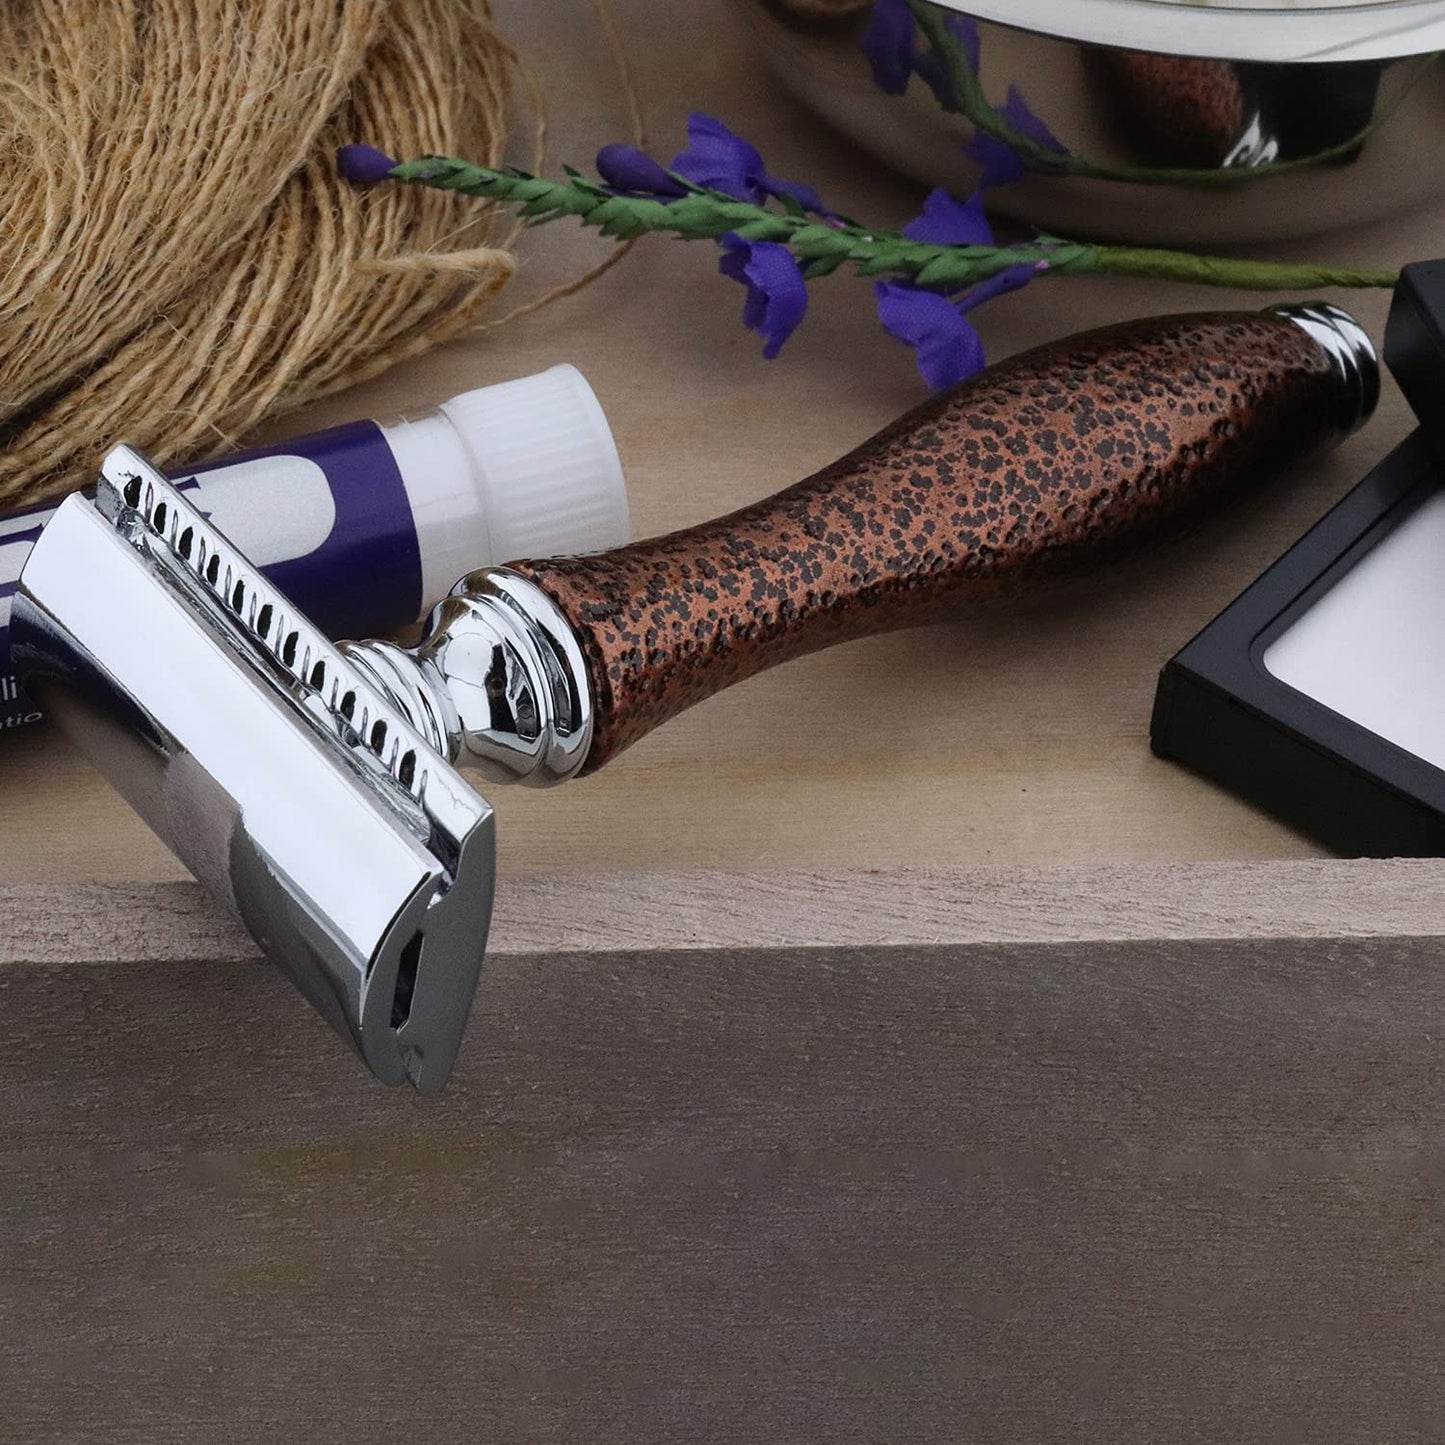 Old School Men's Shaving Set ft Synthetic Brush, DE Safety (Blades Not Included), Engraved Bowl & Soap| Gift for Him